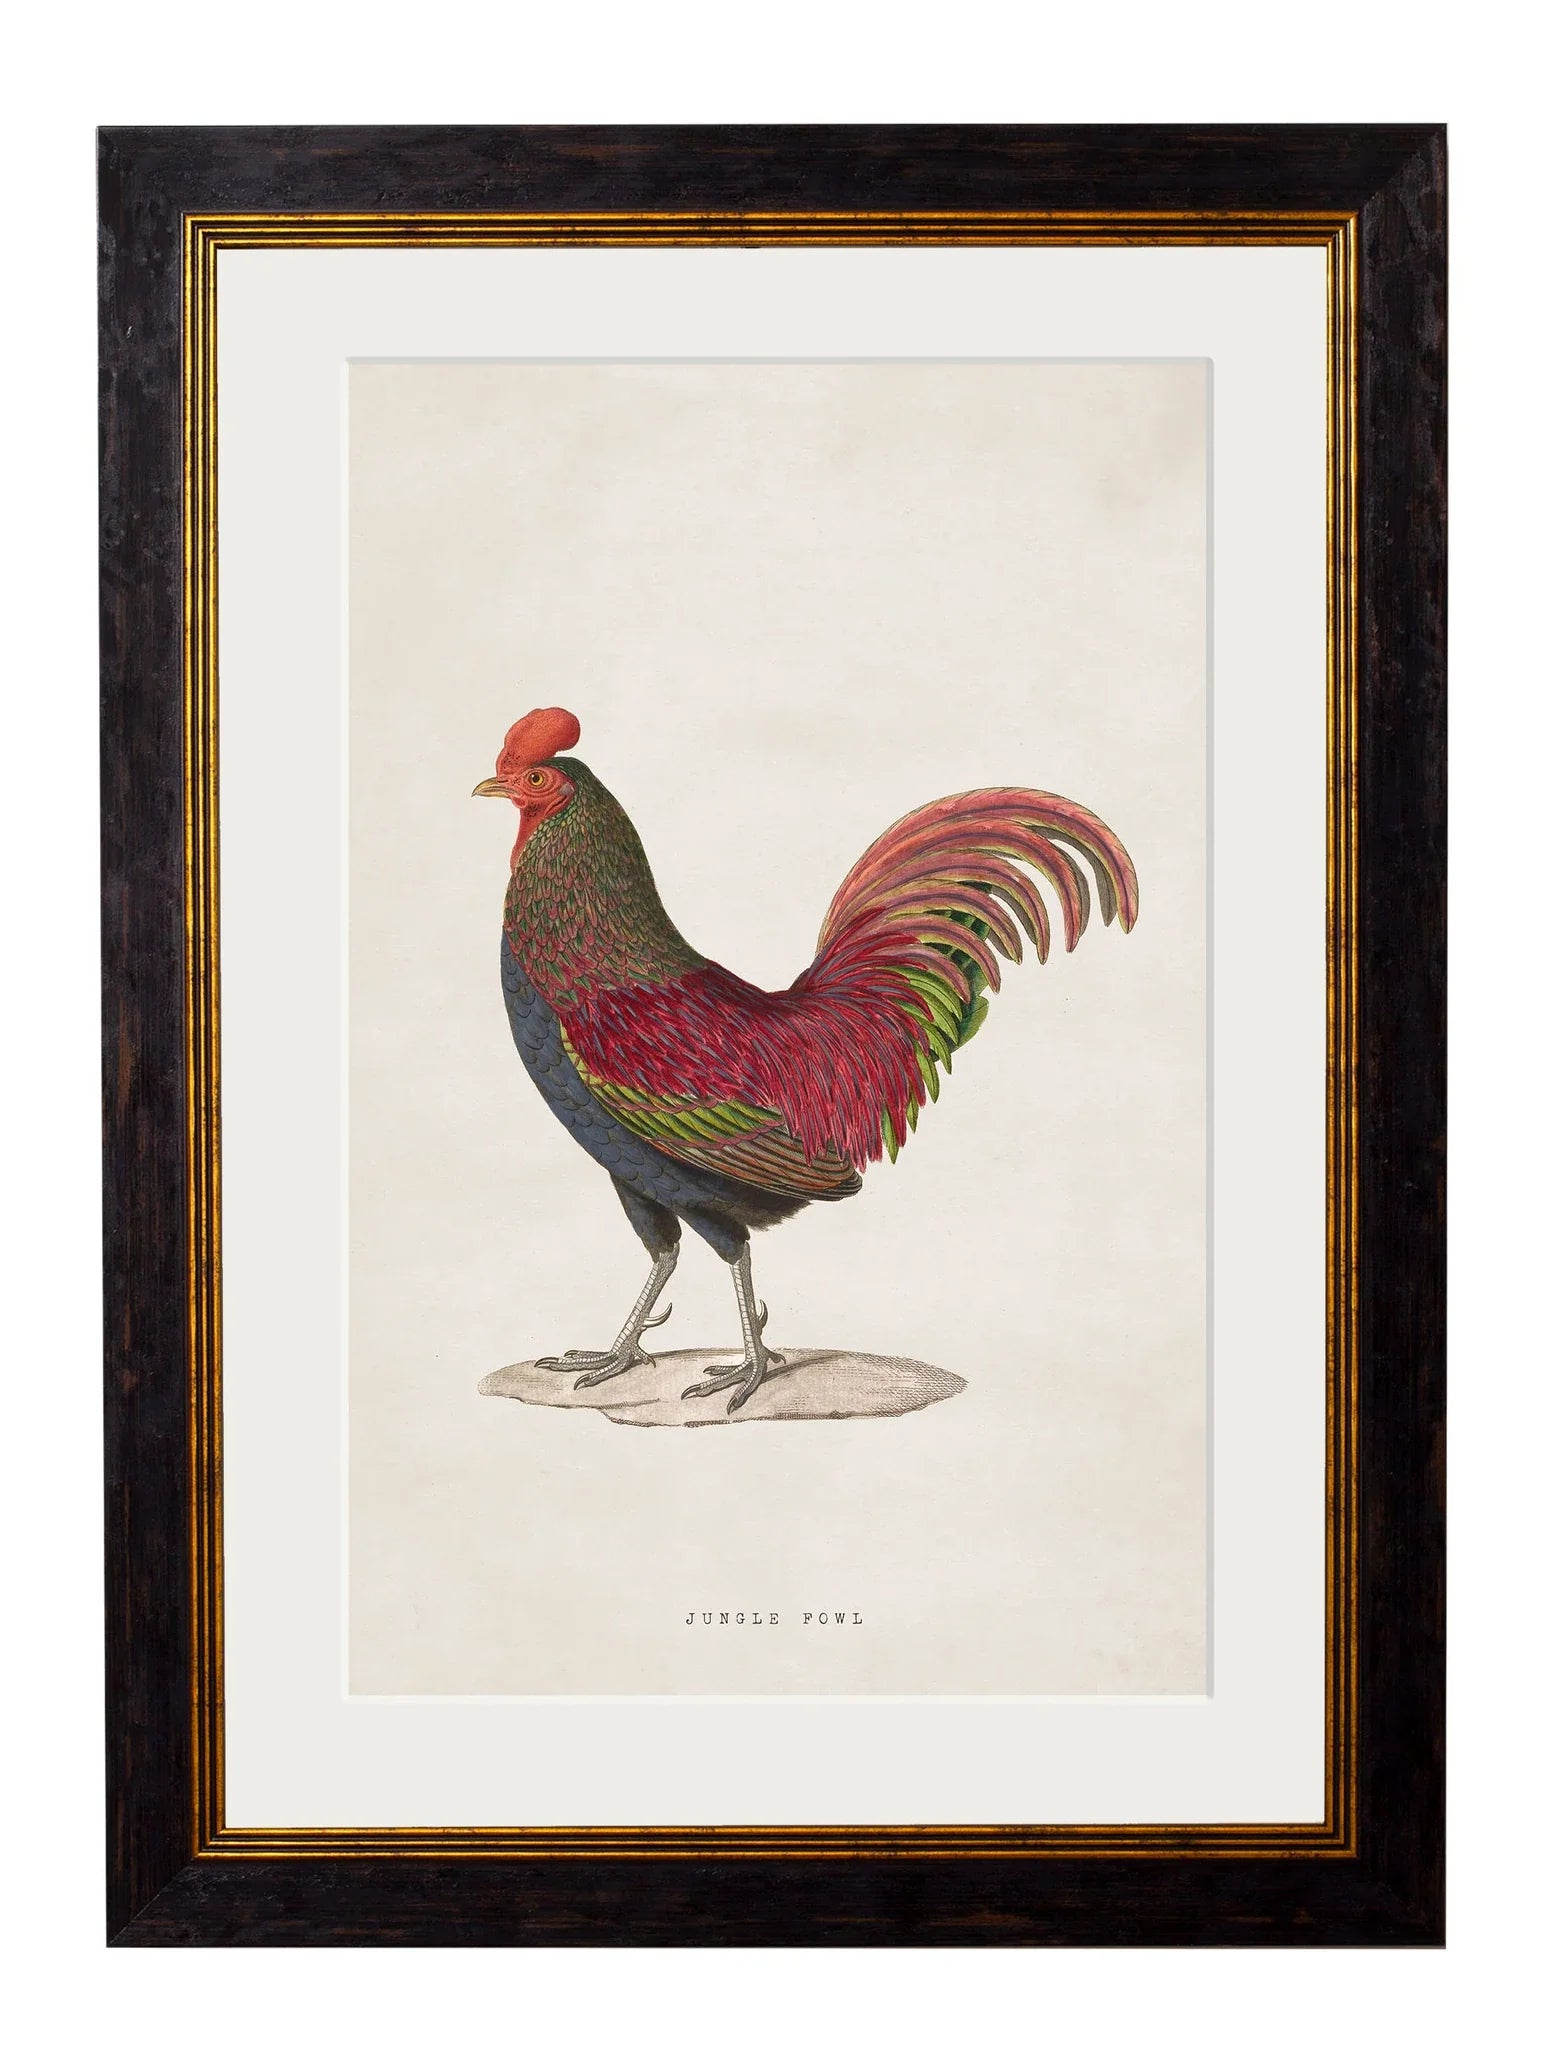 C.1838 Junglefowl Frames for sale - Woodcock and Cavendish